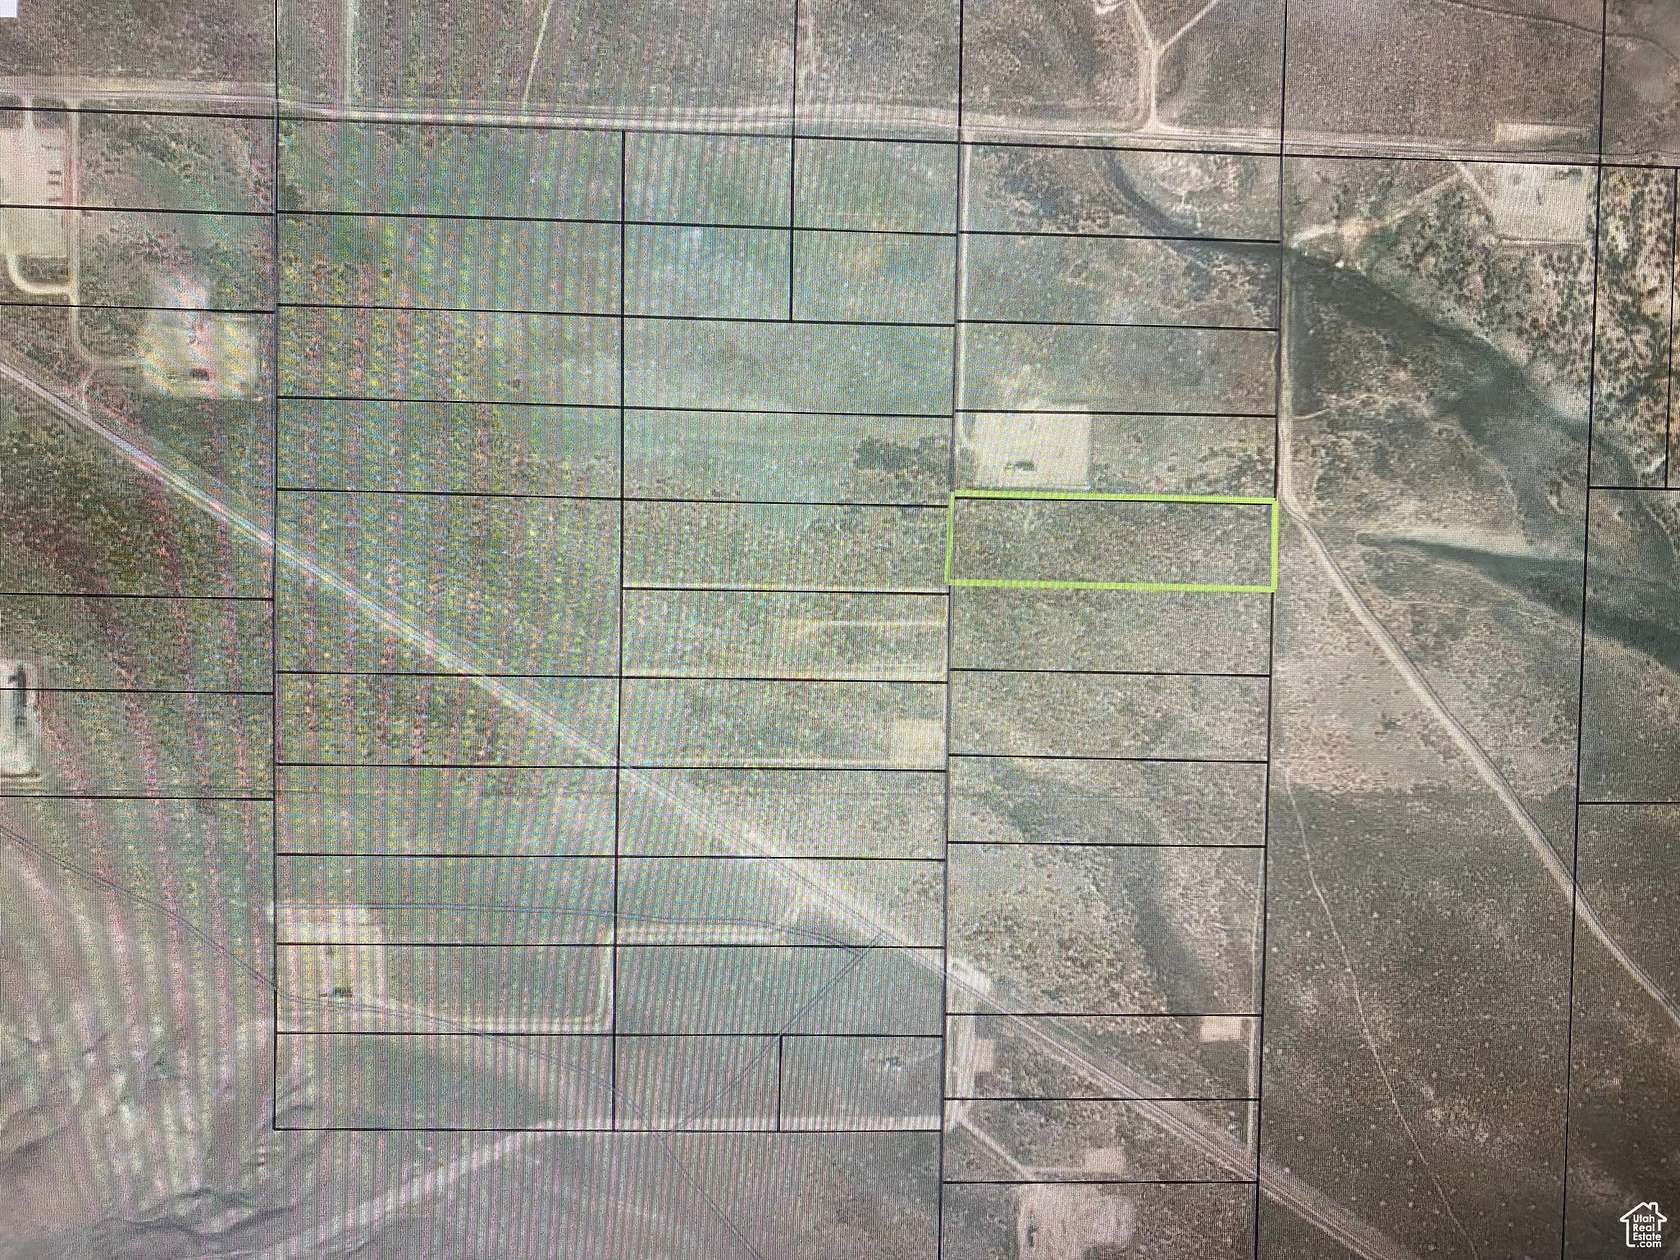 10.6 Acres of Land for Sale in Duchesne, Utah